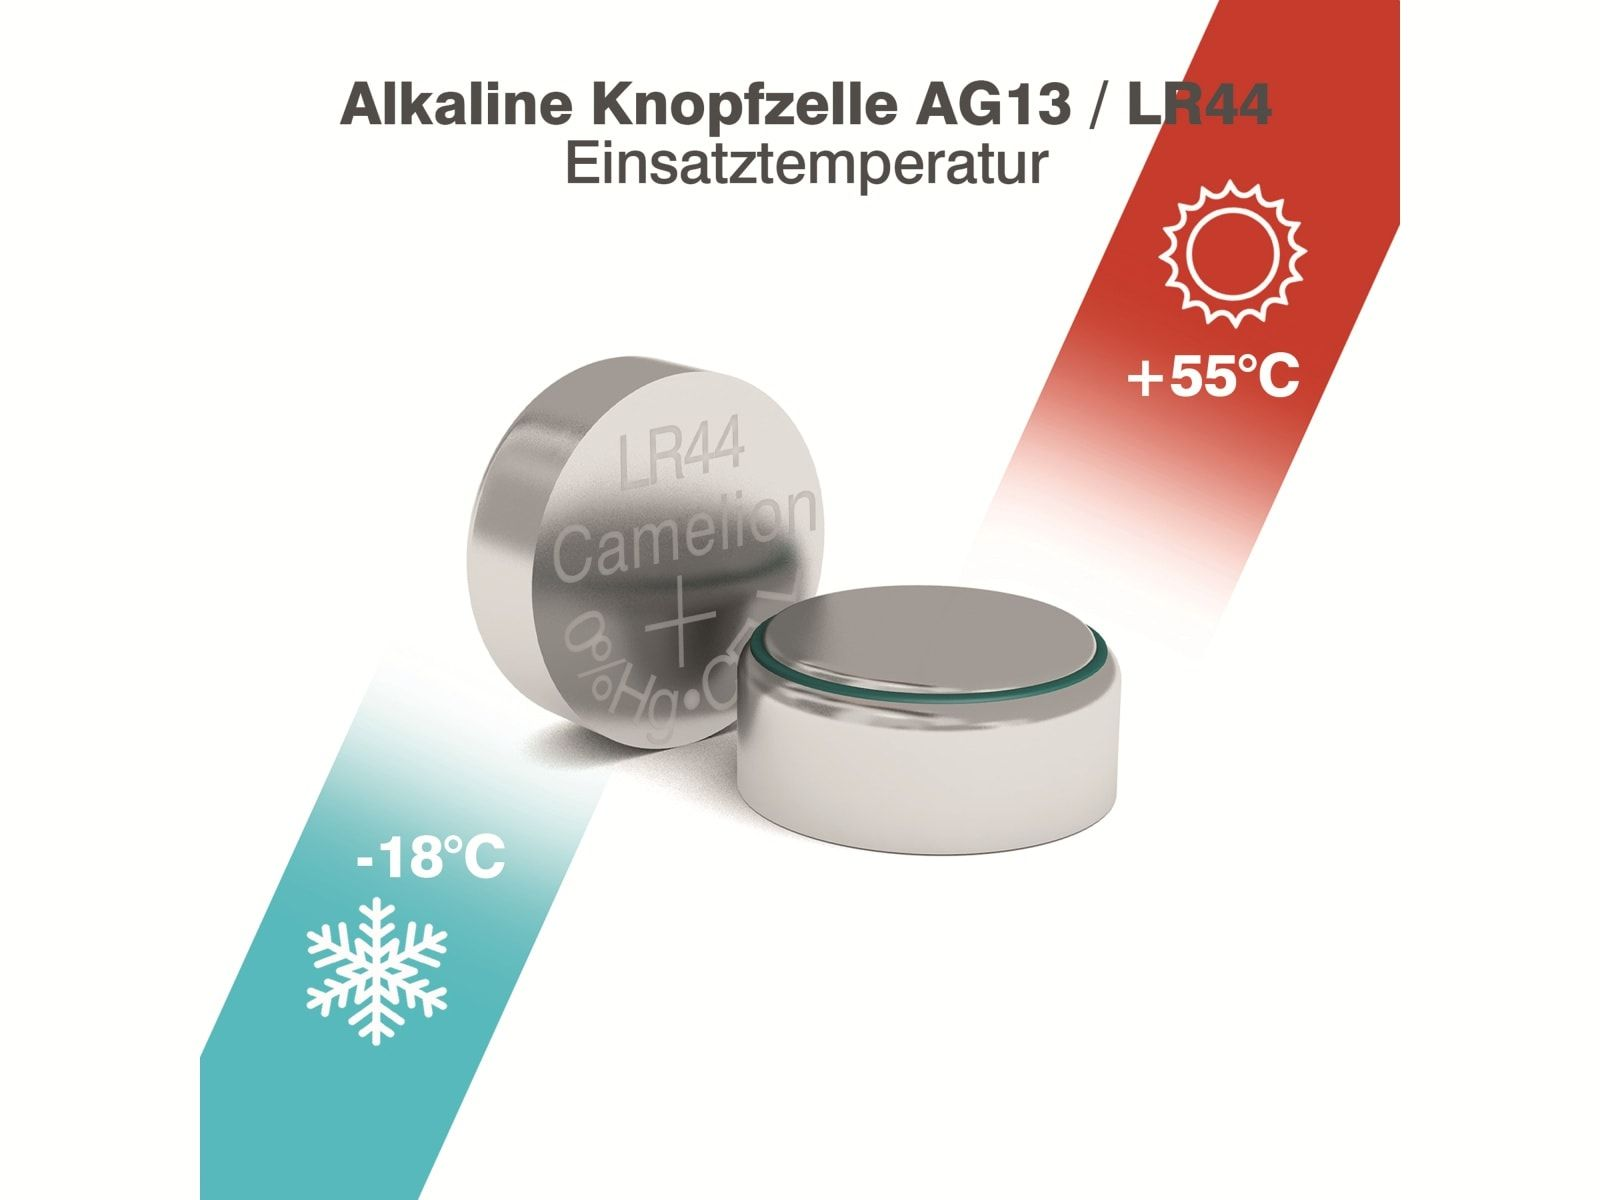 Knopfzelle AG13, 10 Knopfzelle St. CAMELION Alkaline